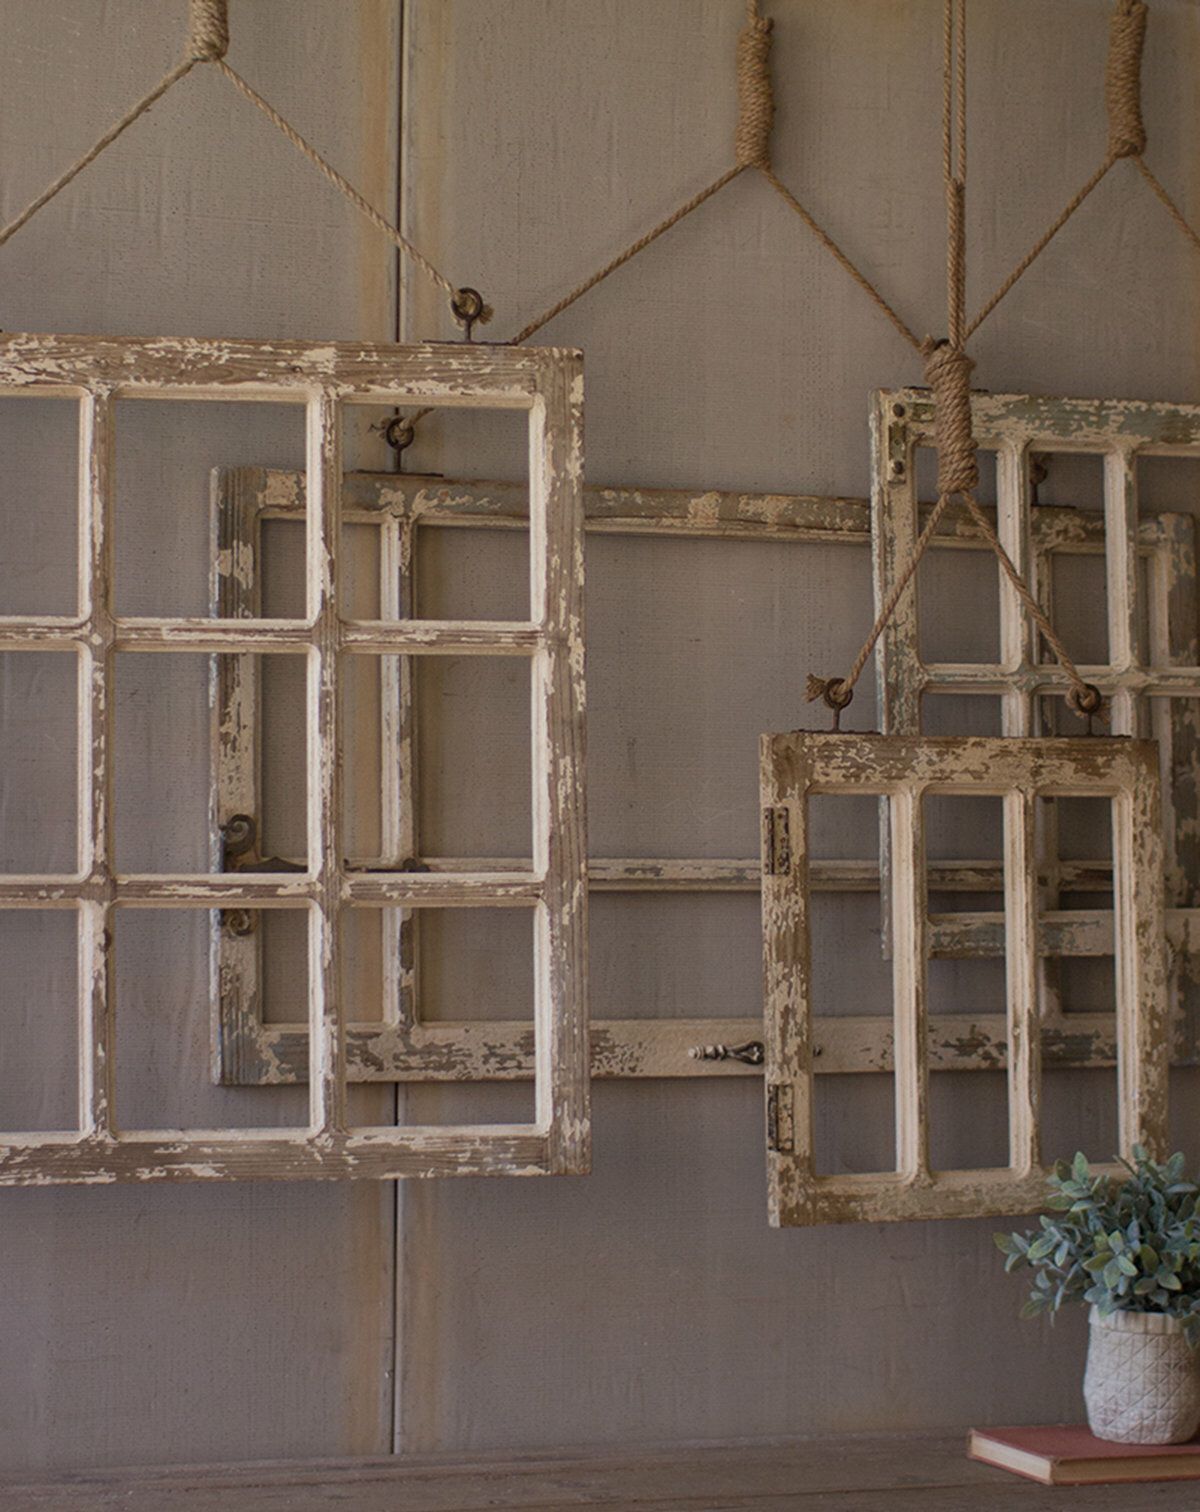 4 Piece Window Frame Wall Décor Set In 2019 | Wall Decor Regarding 4 Piece Wall Decor Sets (View 20 of 30)